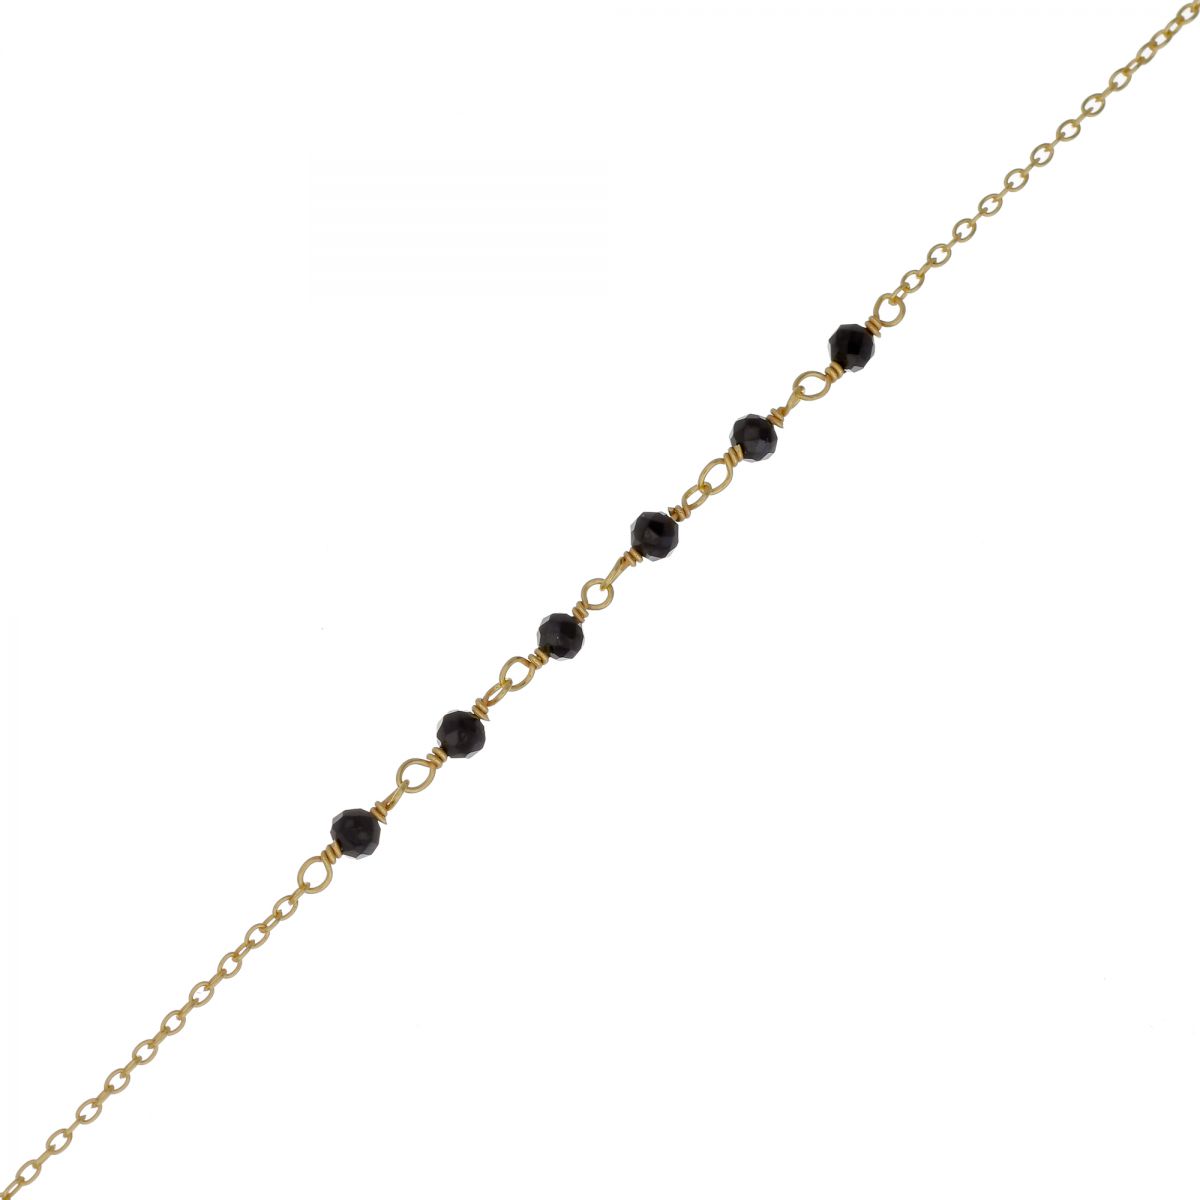 ff bracelet 3mm 5 black agate beaded gold plated